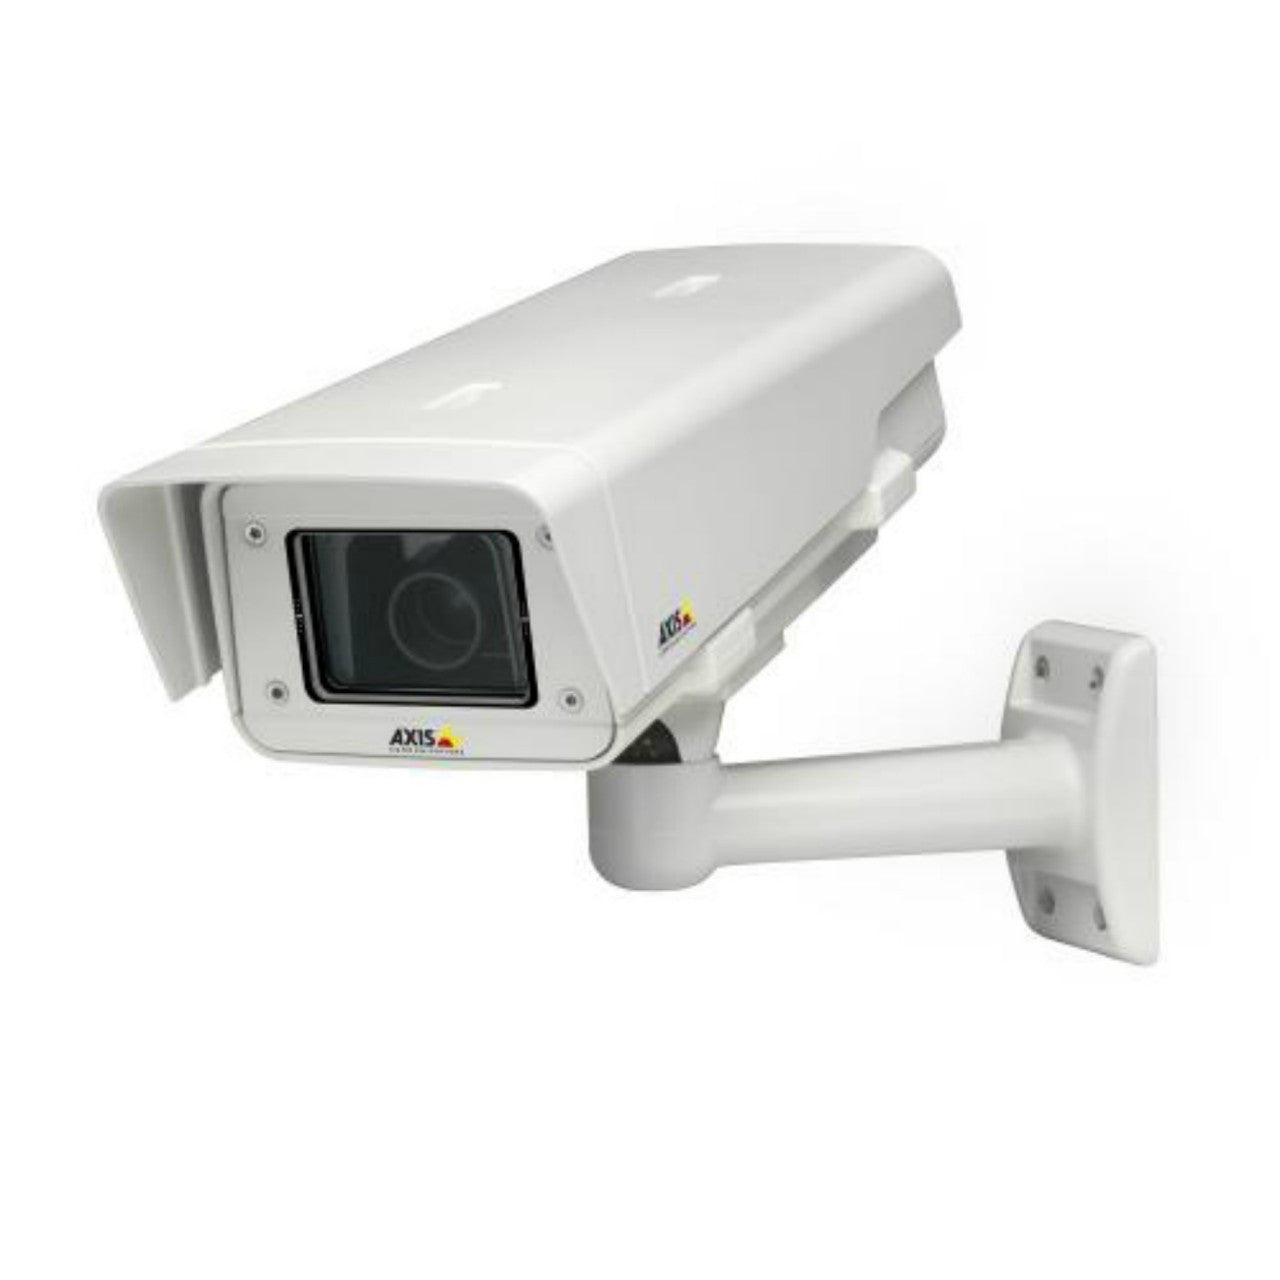 AXIS P1344-E (0350-001) Outdoor IP Network Camera